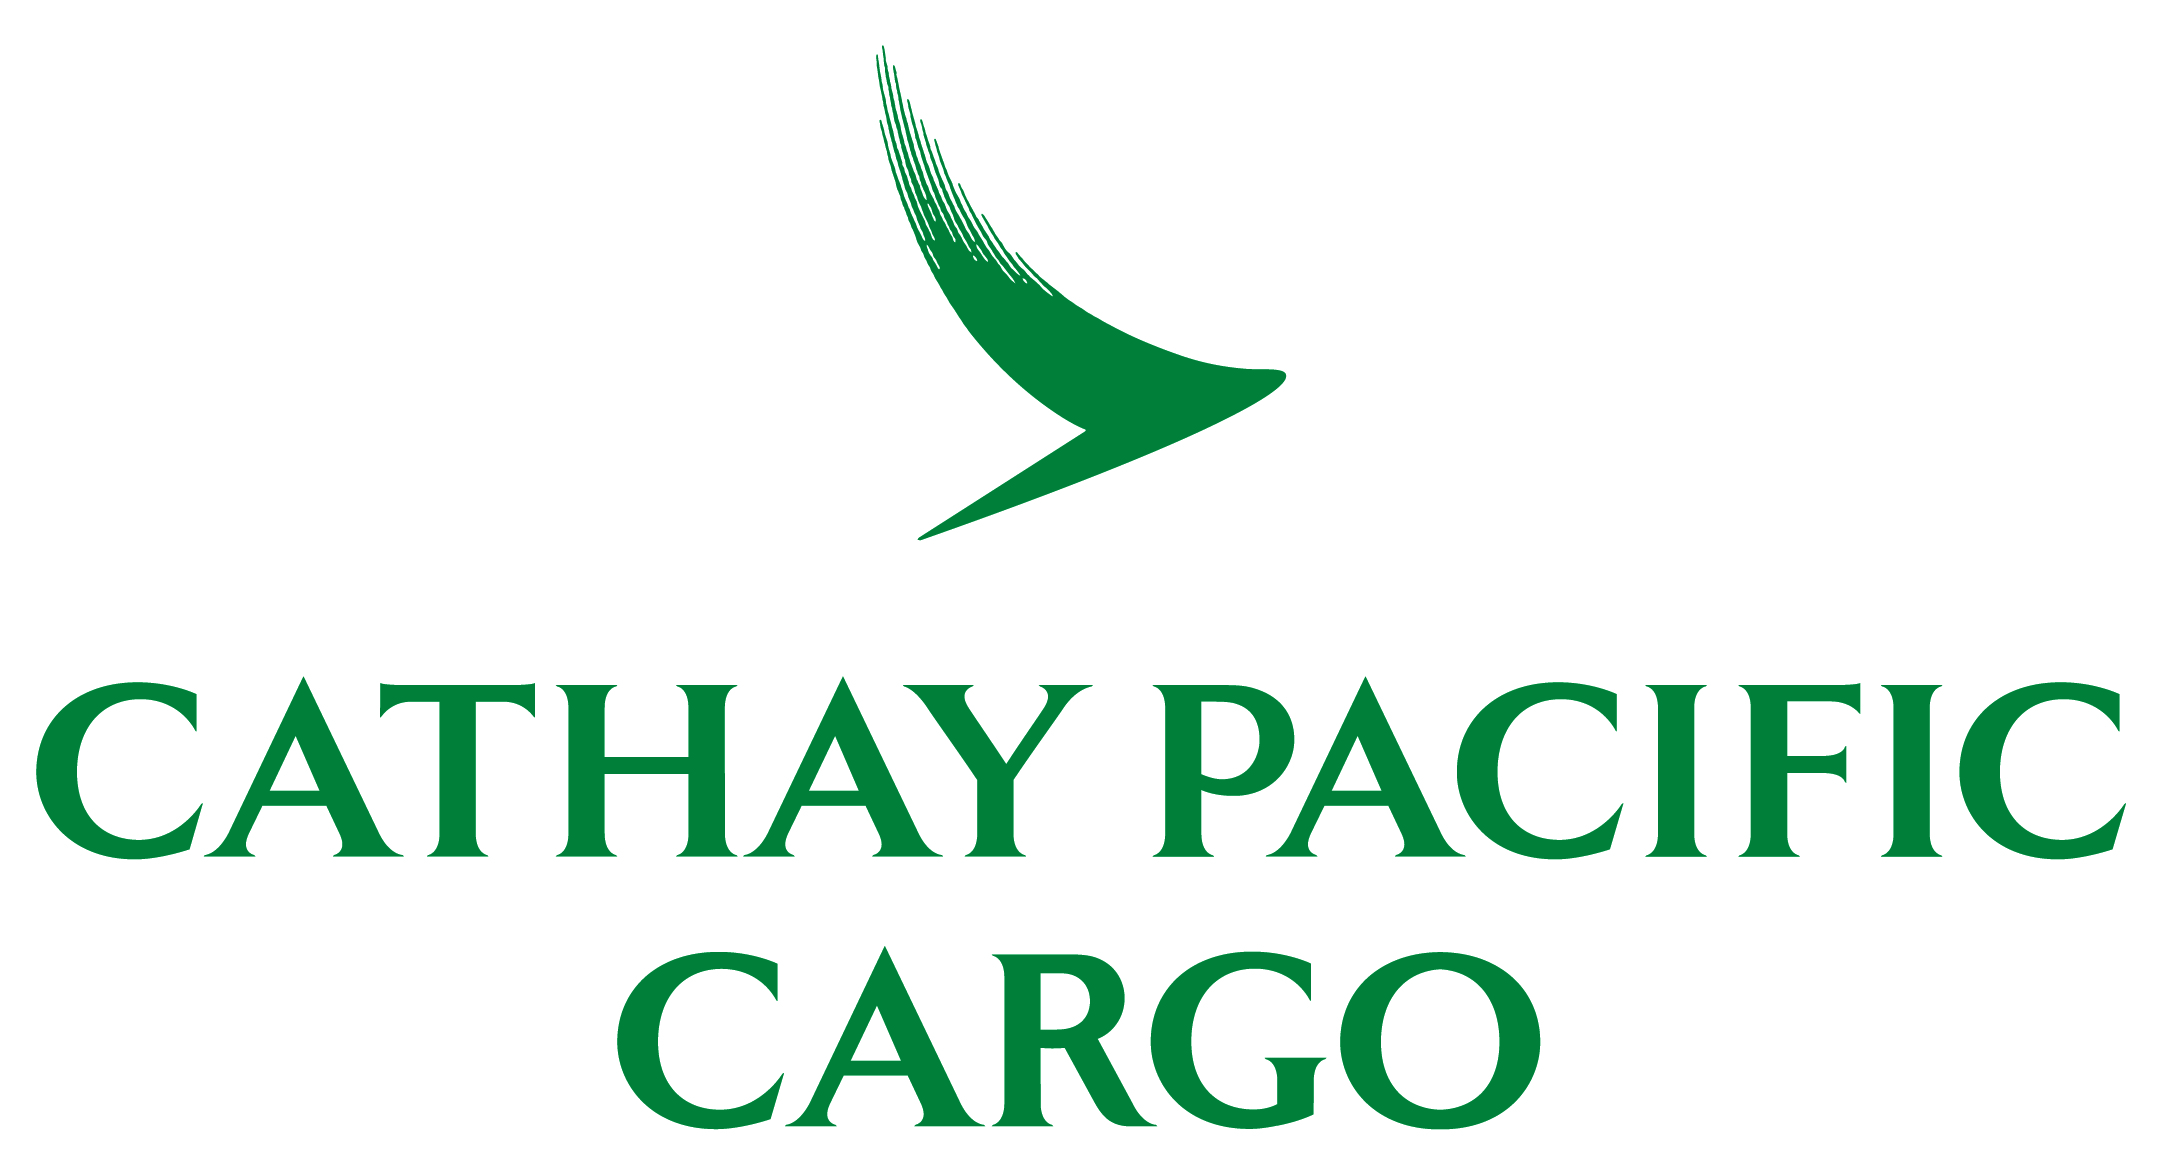 GOED Cathay Pacific Cargo 2019.jpg